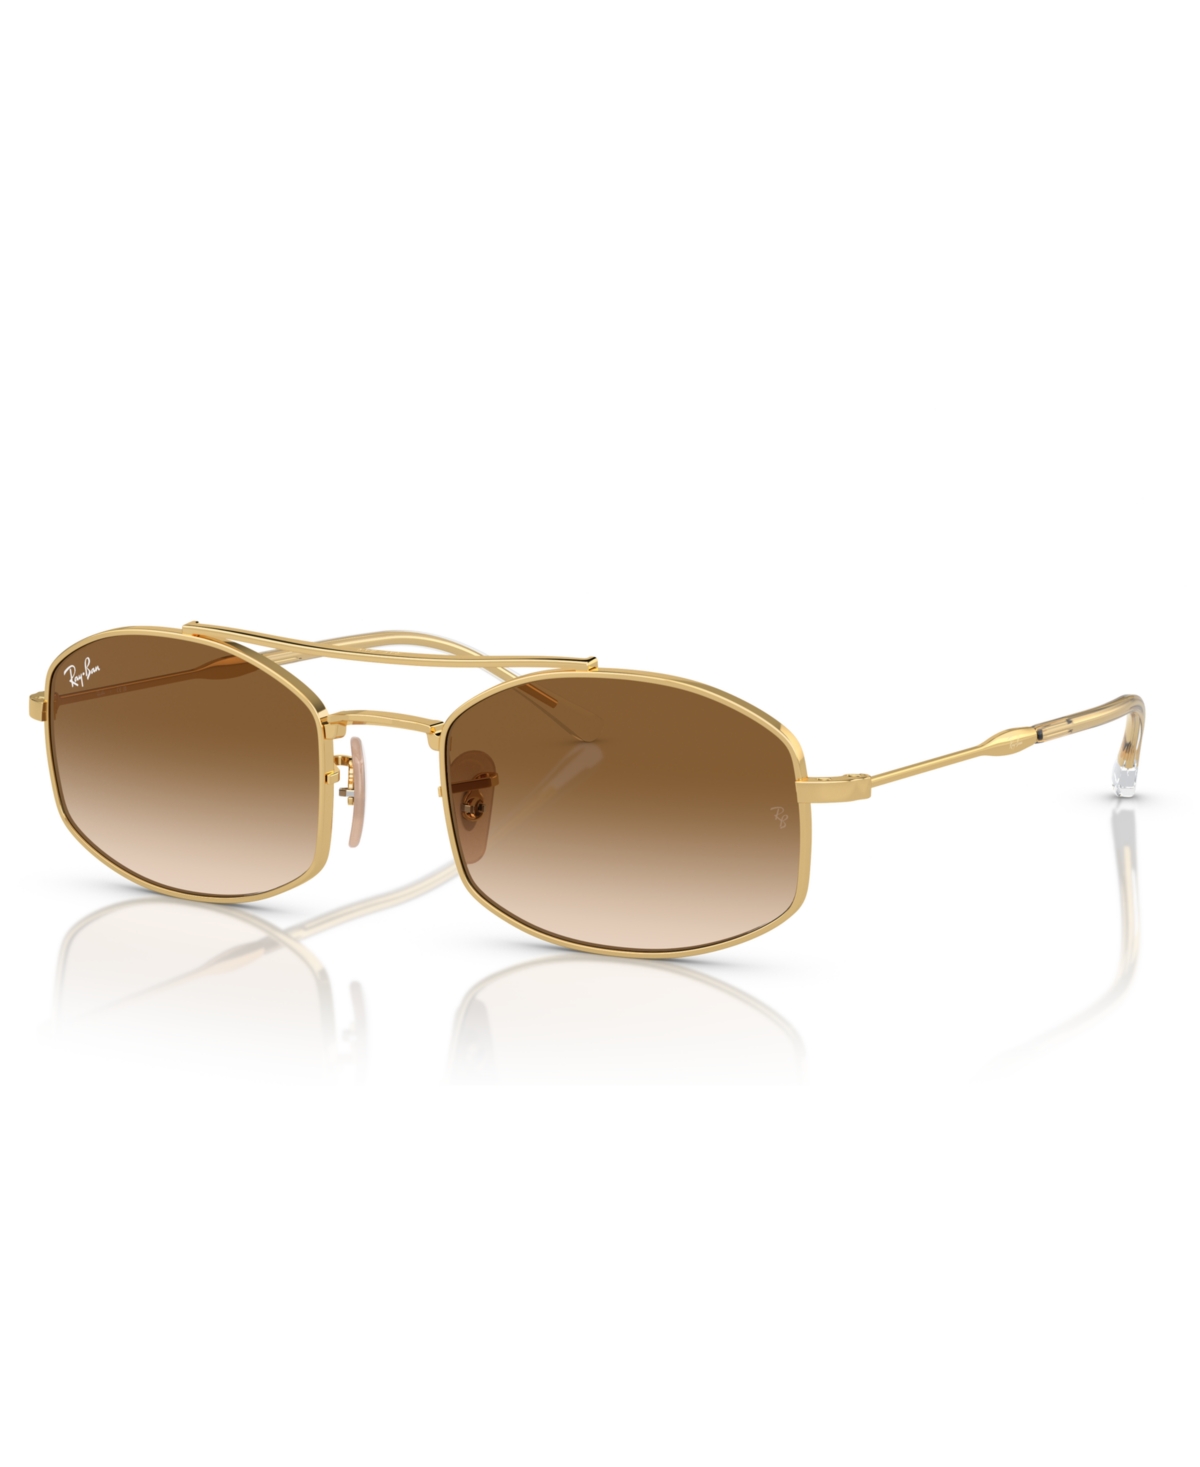 Unisex Sunglasses, Rb3719 - Gold